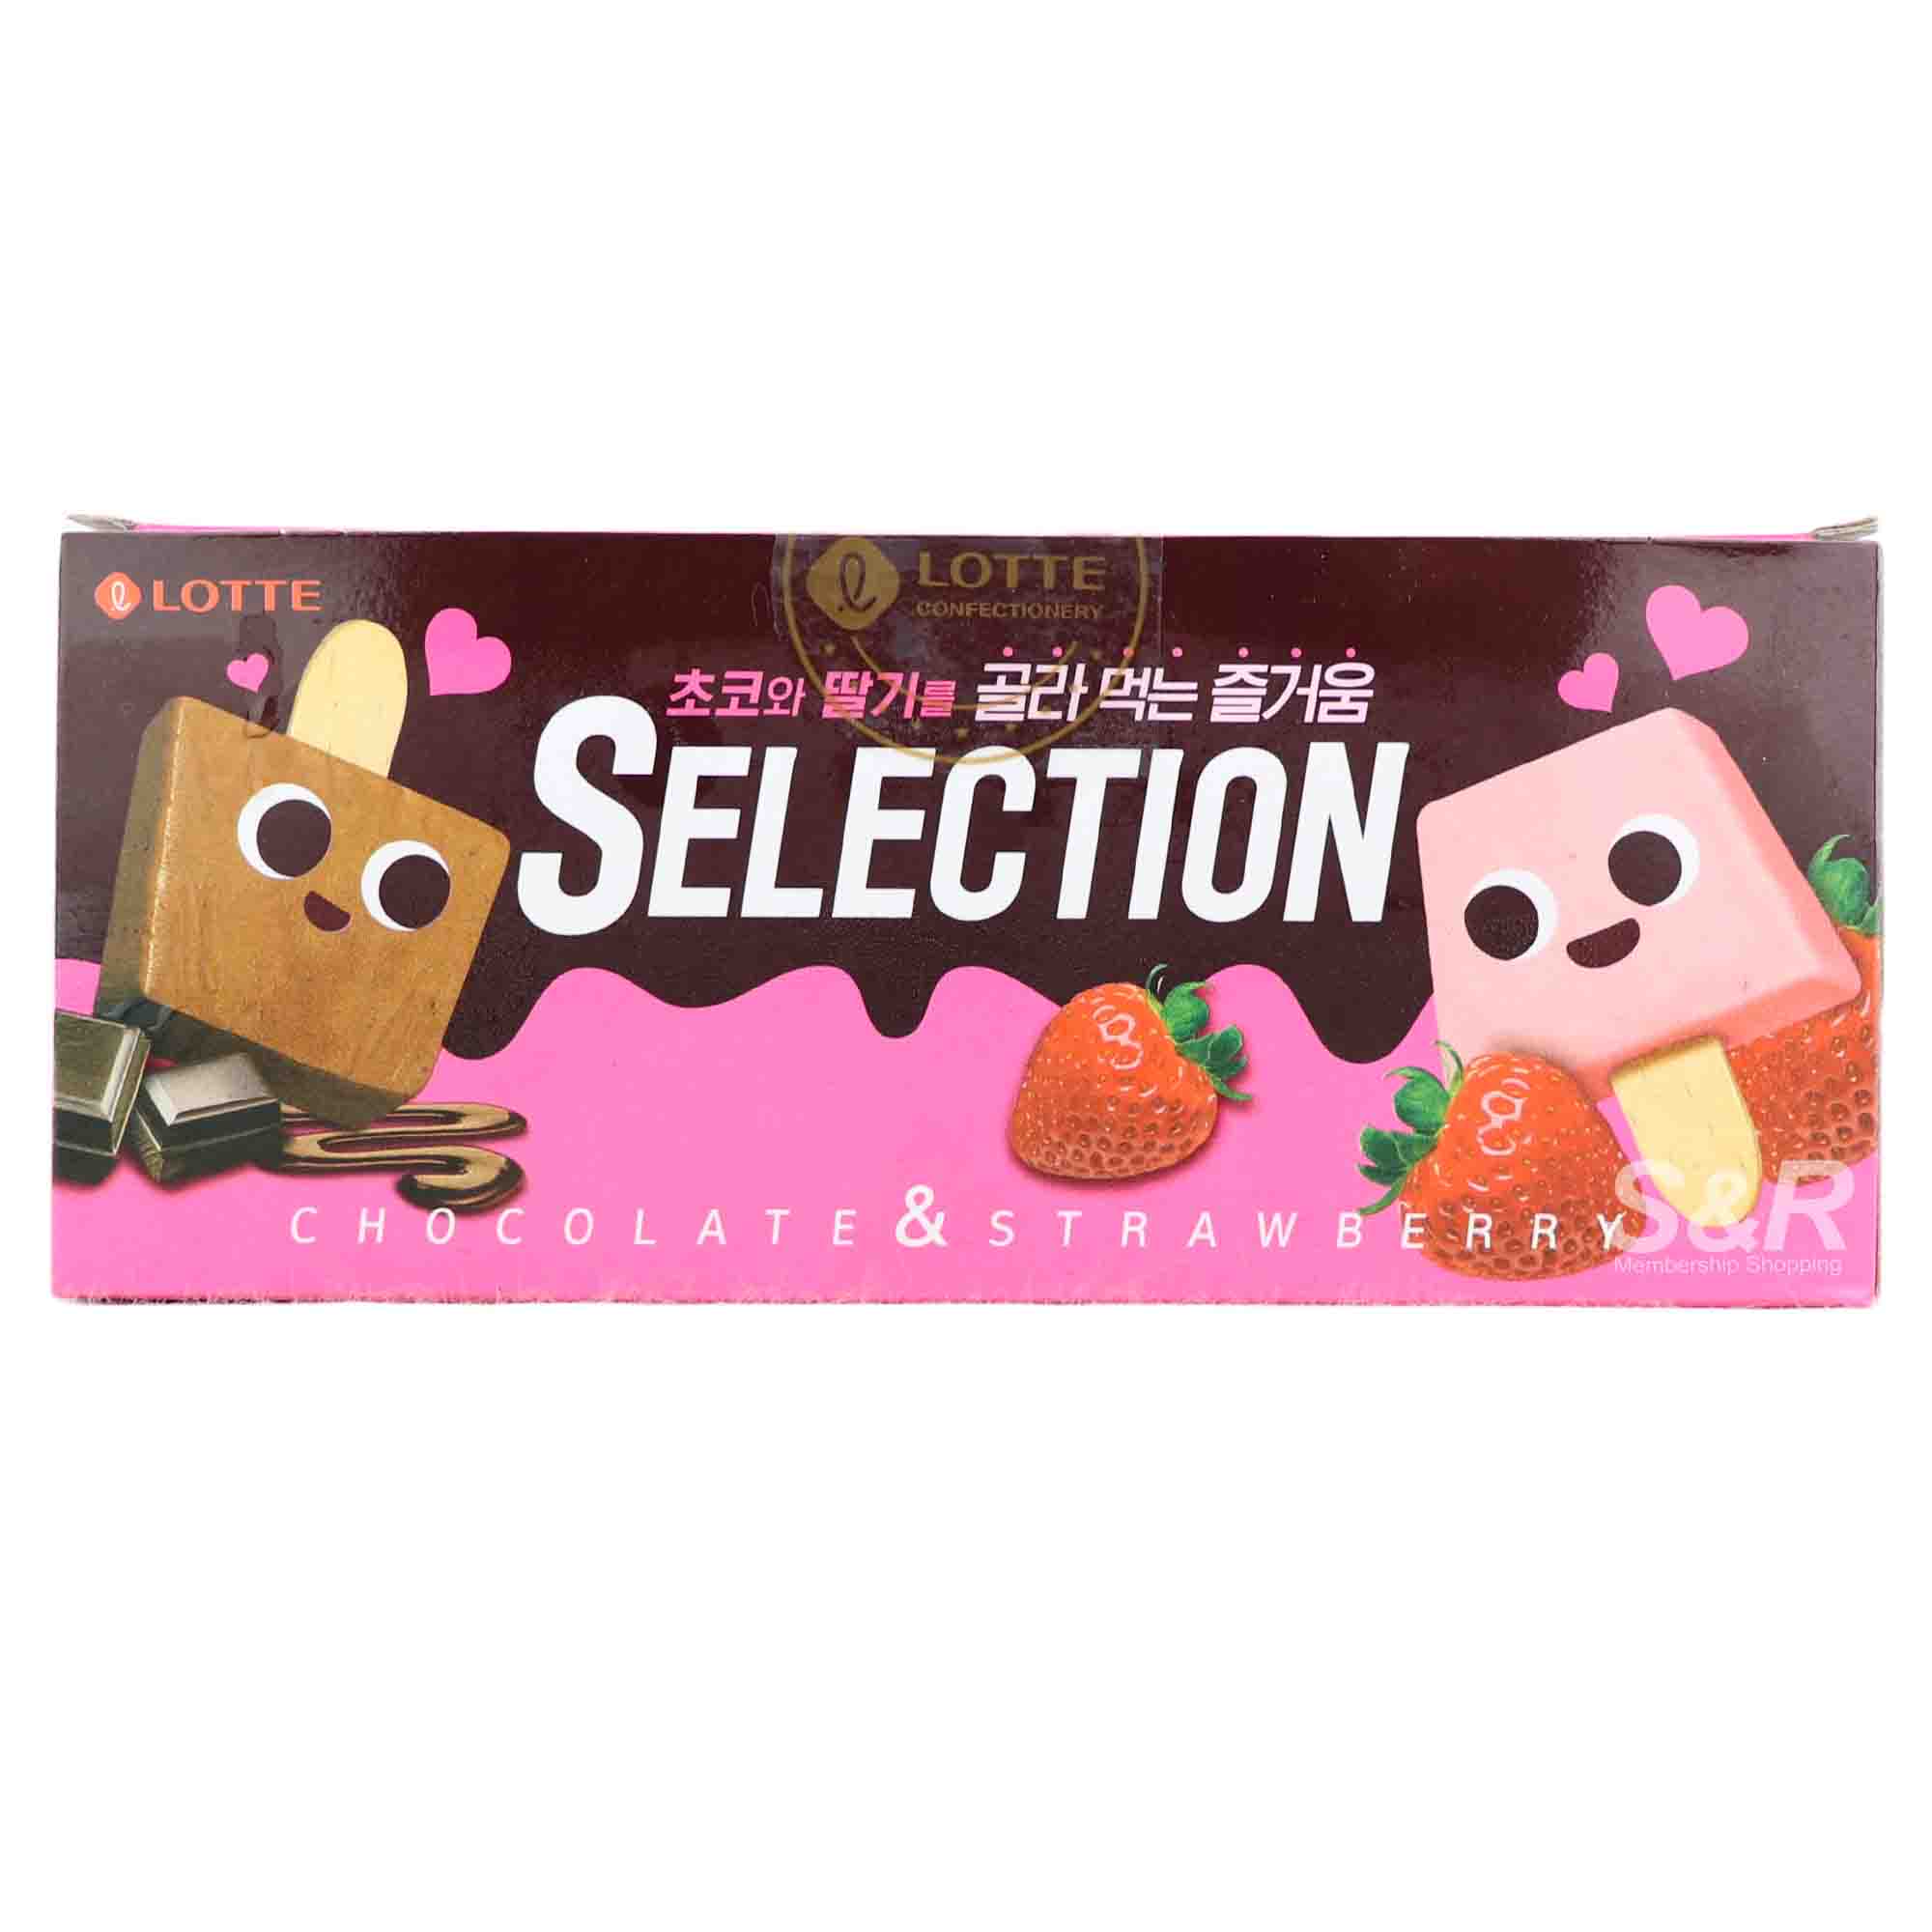 Lotte Selection Chocolate & Strawberry Ice Cream Bar 8pcs